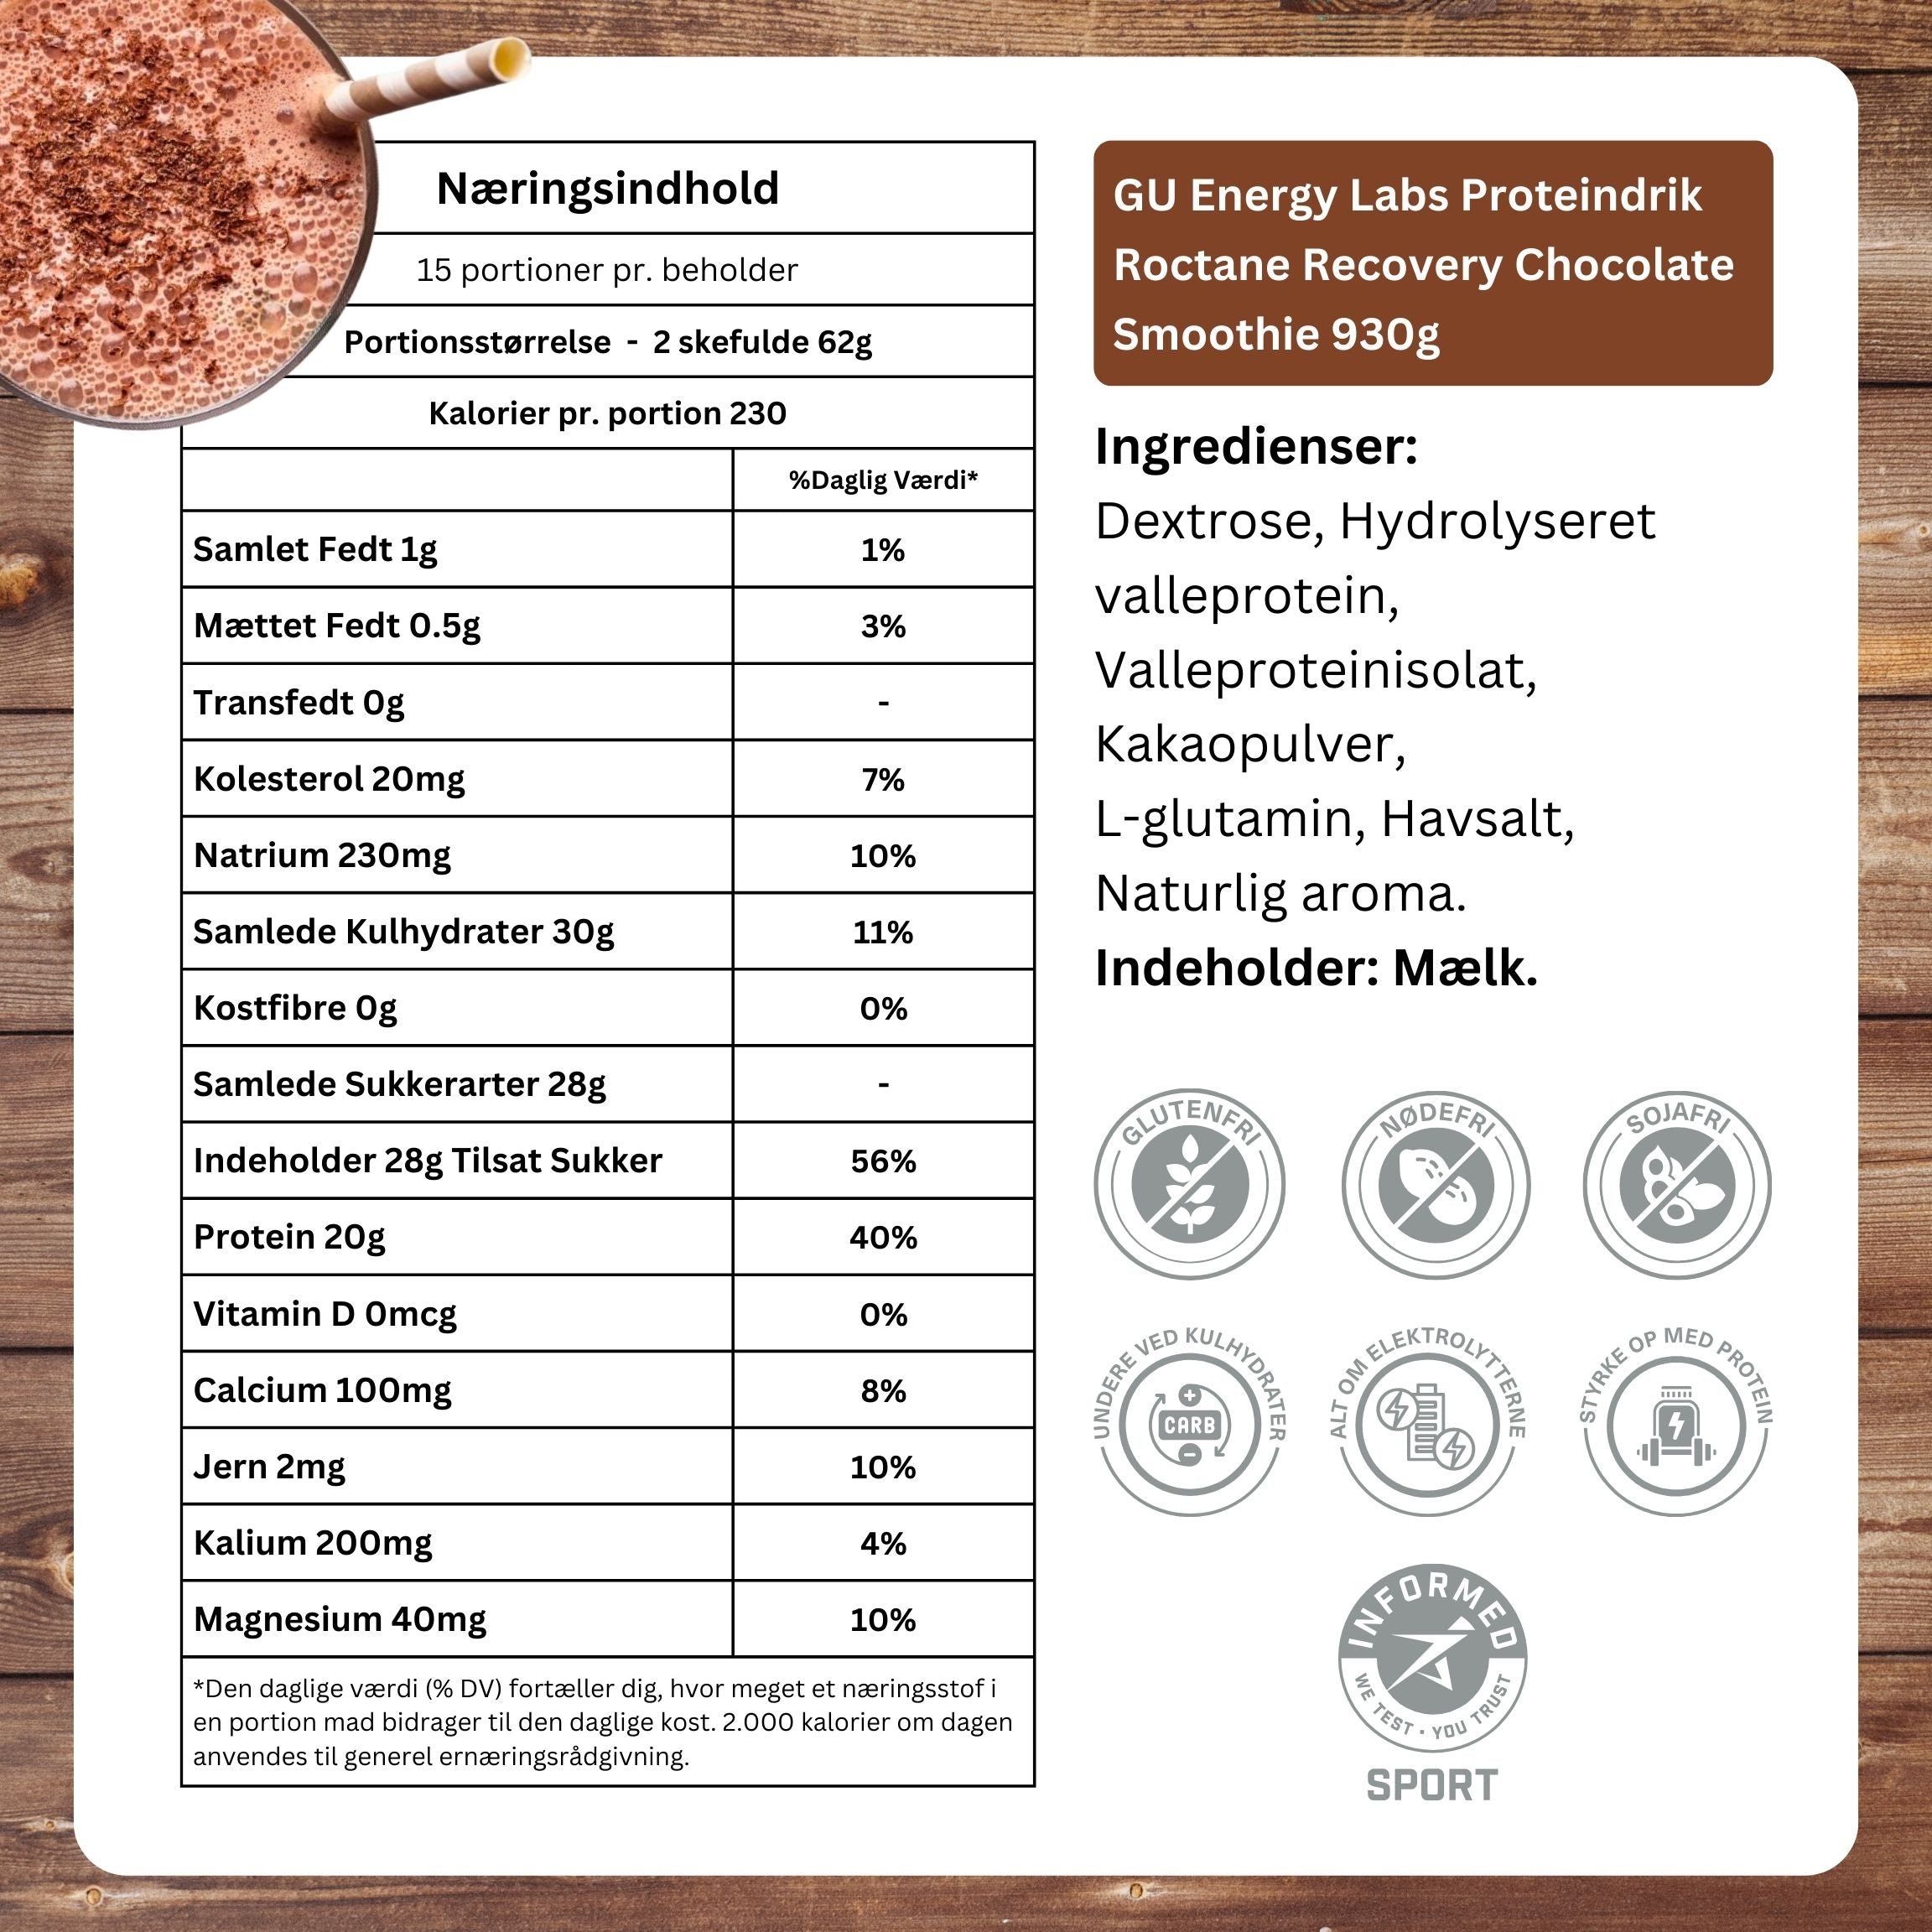 GU Energy Proteindrik Roctane Recovery Chocolate Smoothie 930g - Danish Ingredients